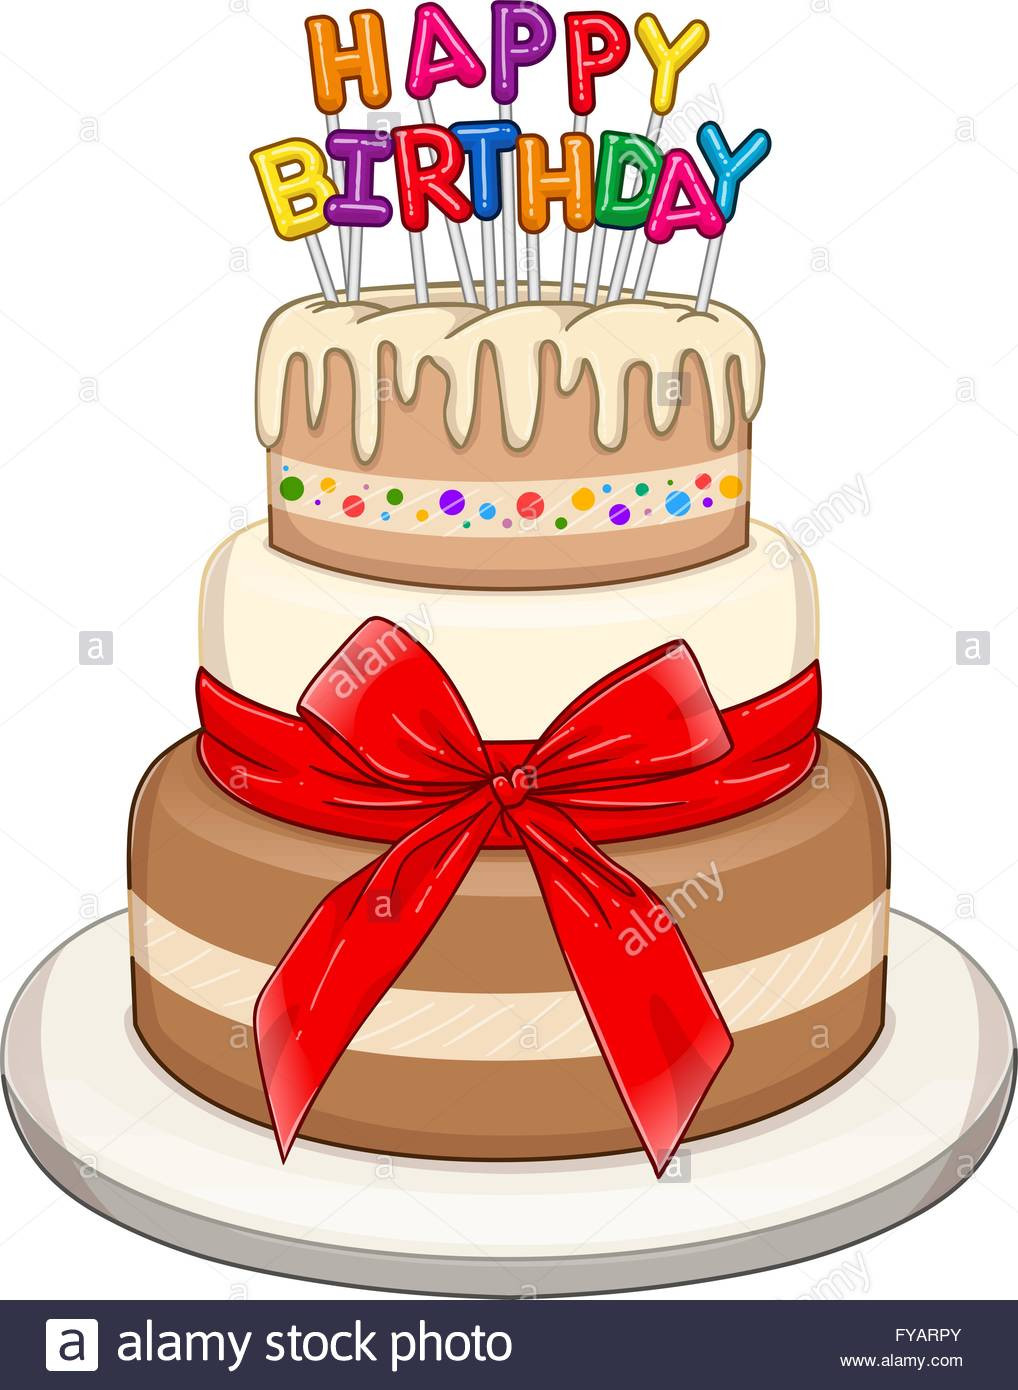 Happy Birthday Cake Text
 Vector illustration of 3 floors birthday cake with Happy